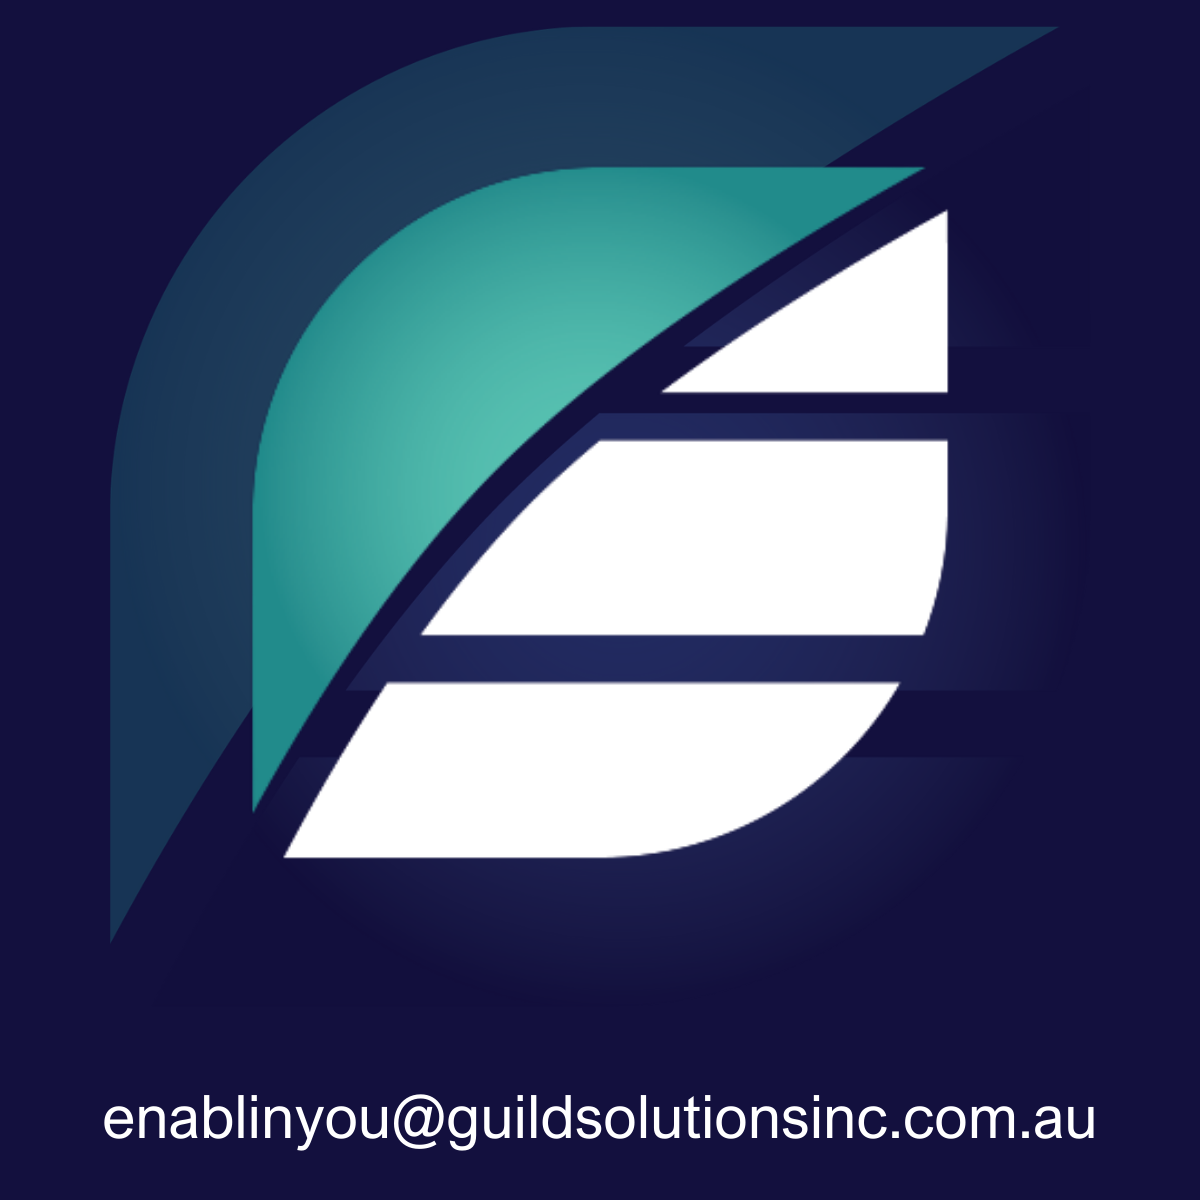 Guild Solutions Inc